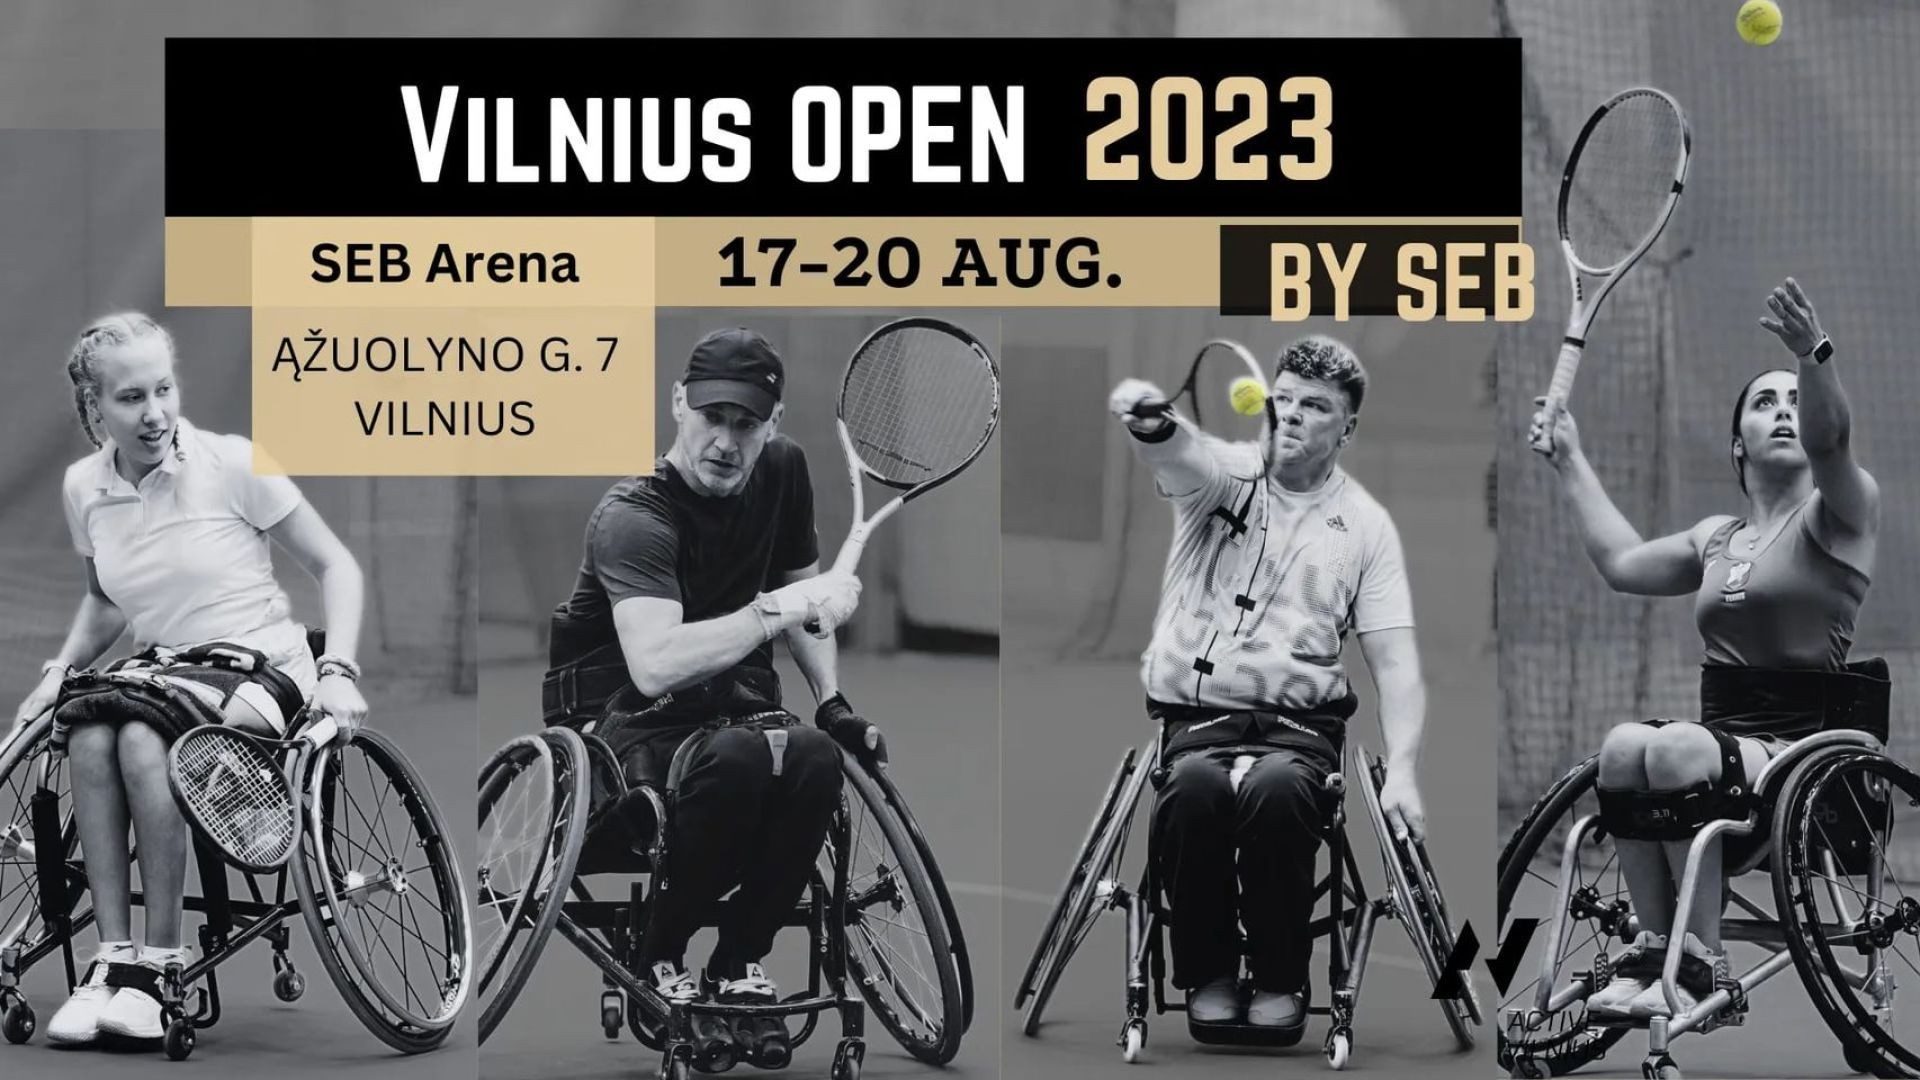 COURT 4  DAY 1 - VILNIIUS OPEN 2023 BY SEB